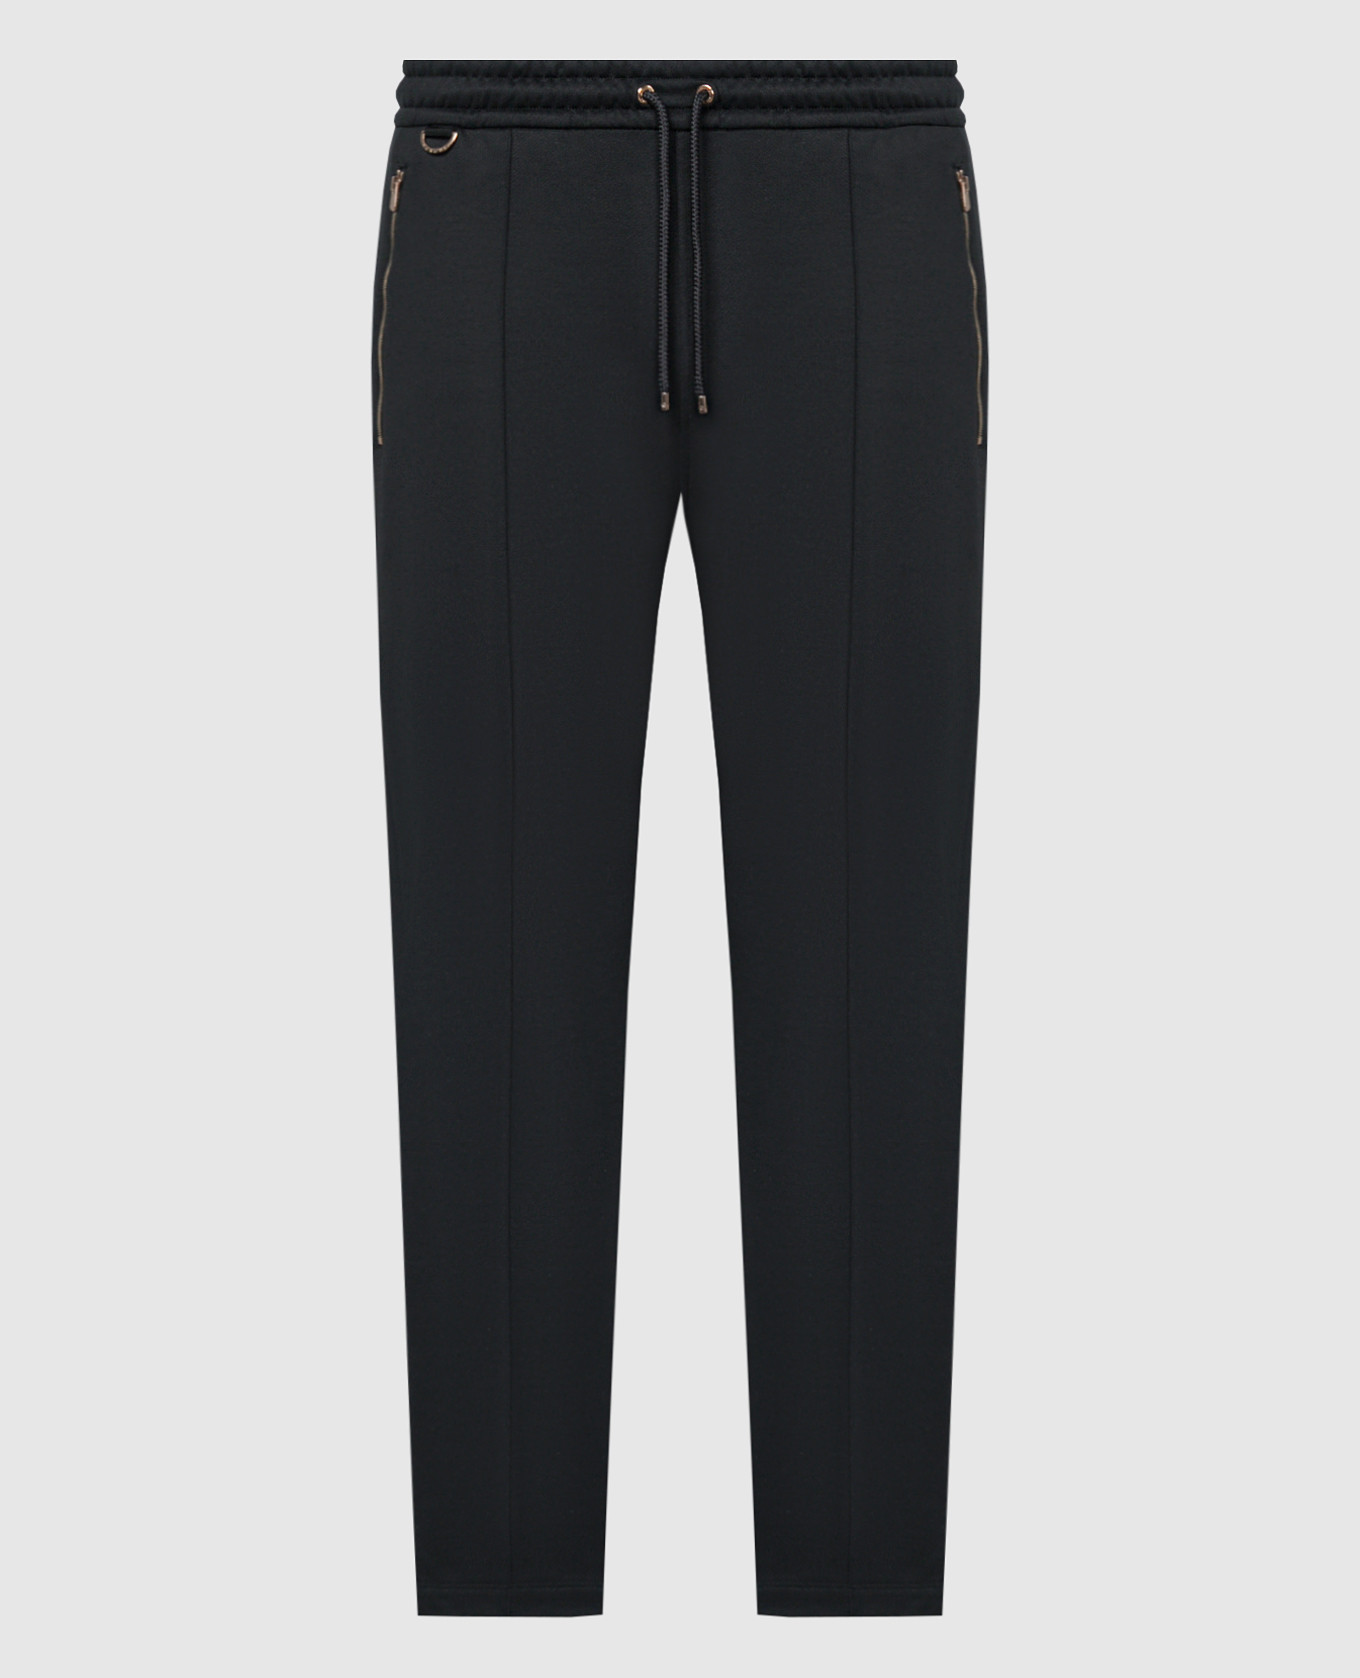 Black sweatpants with logo silk